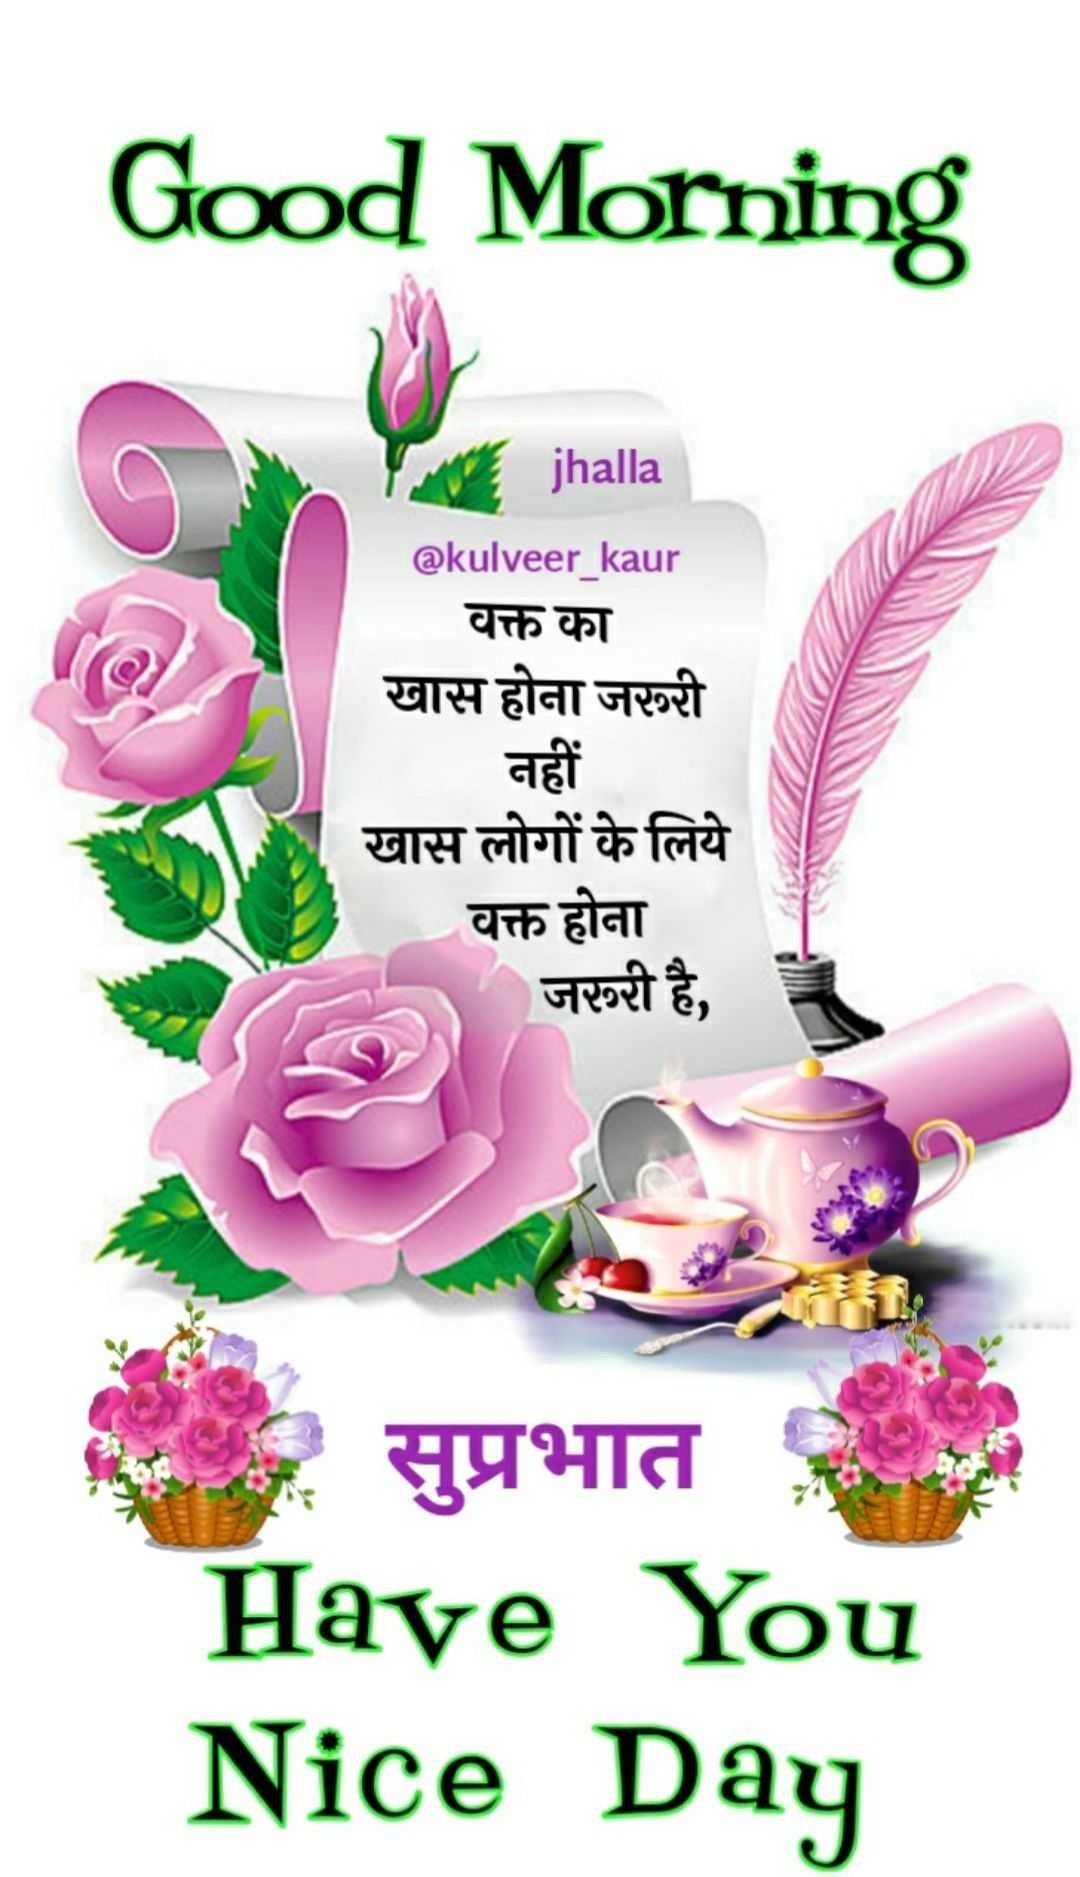 Good Morning Hindi Colorful Images Download